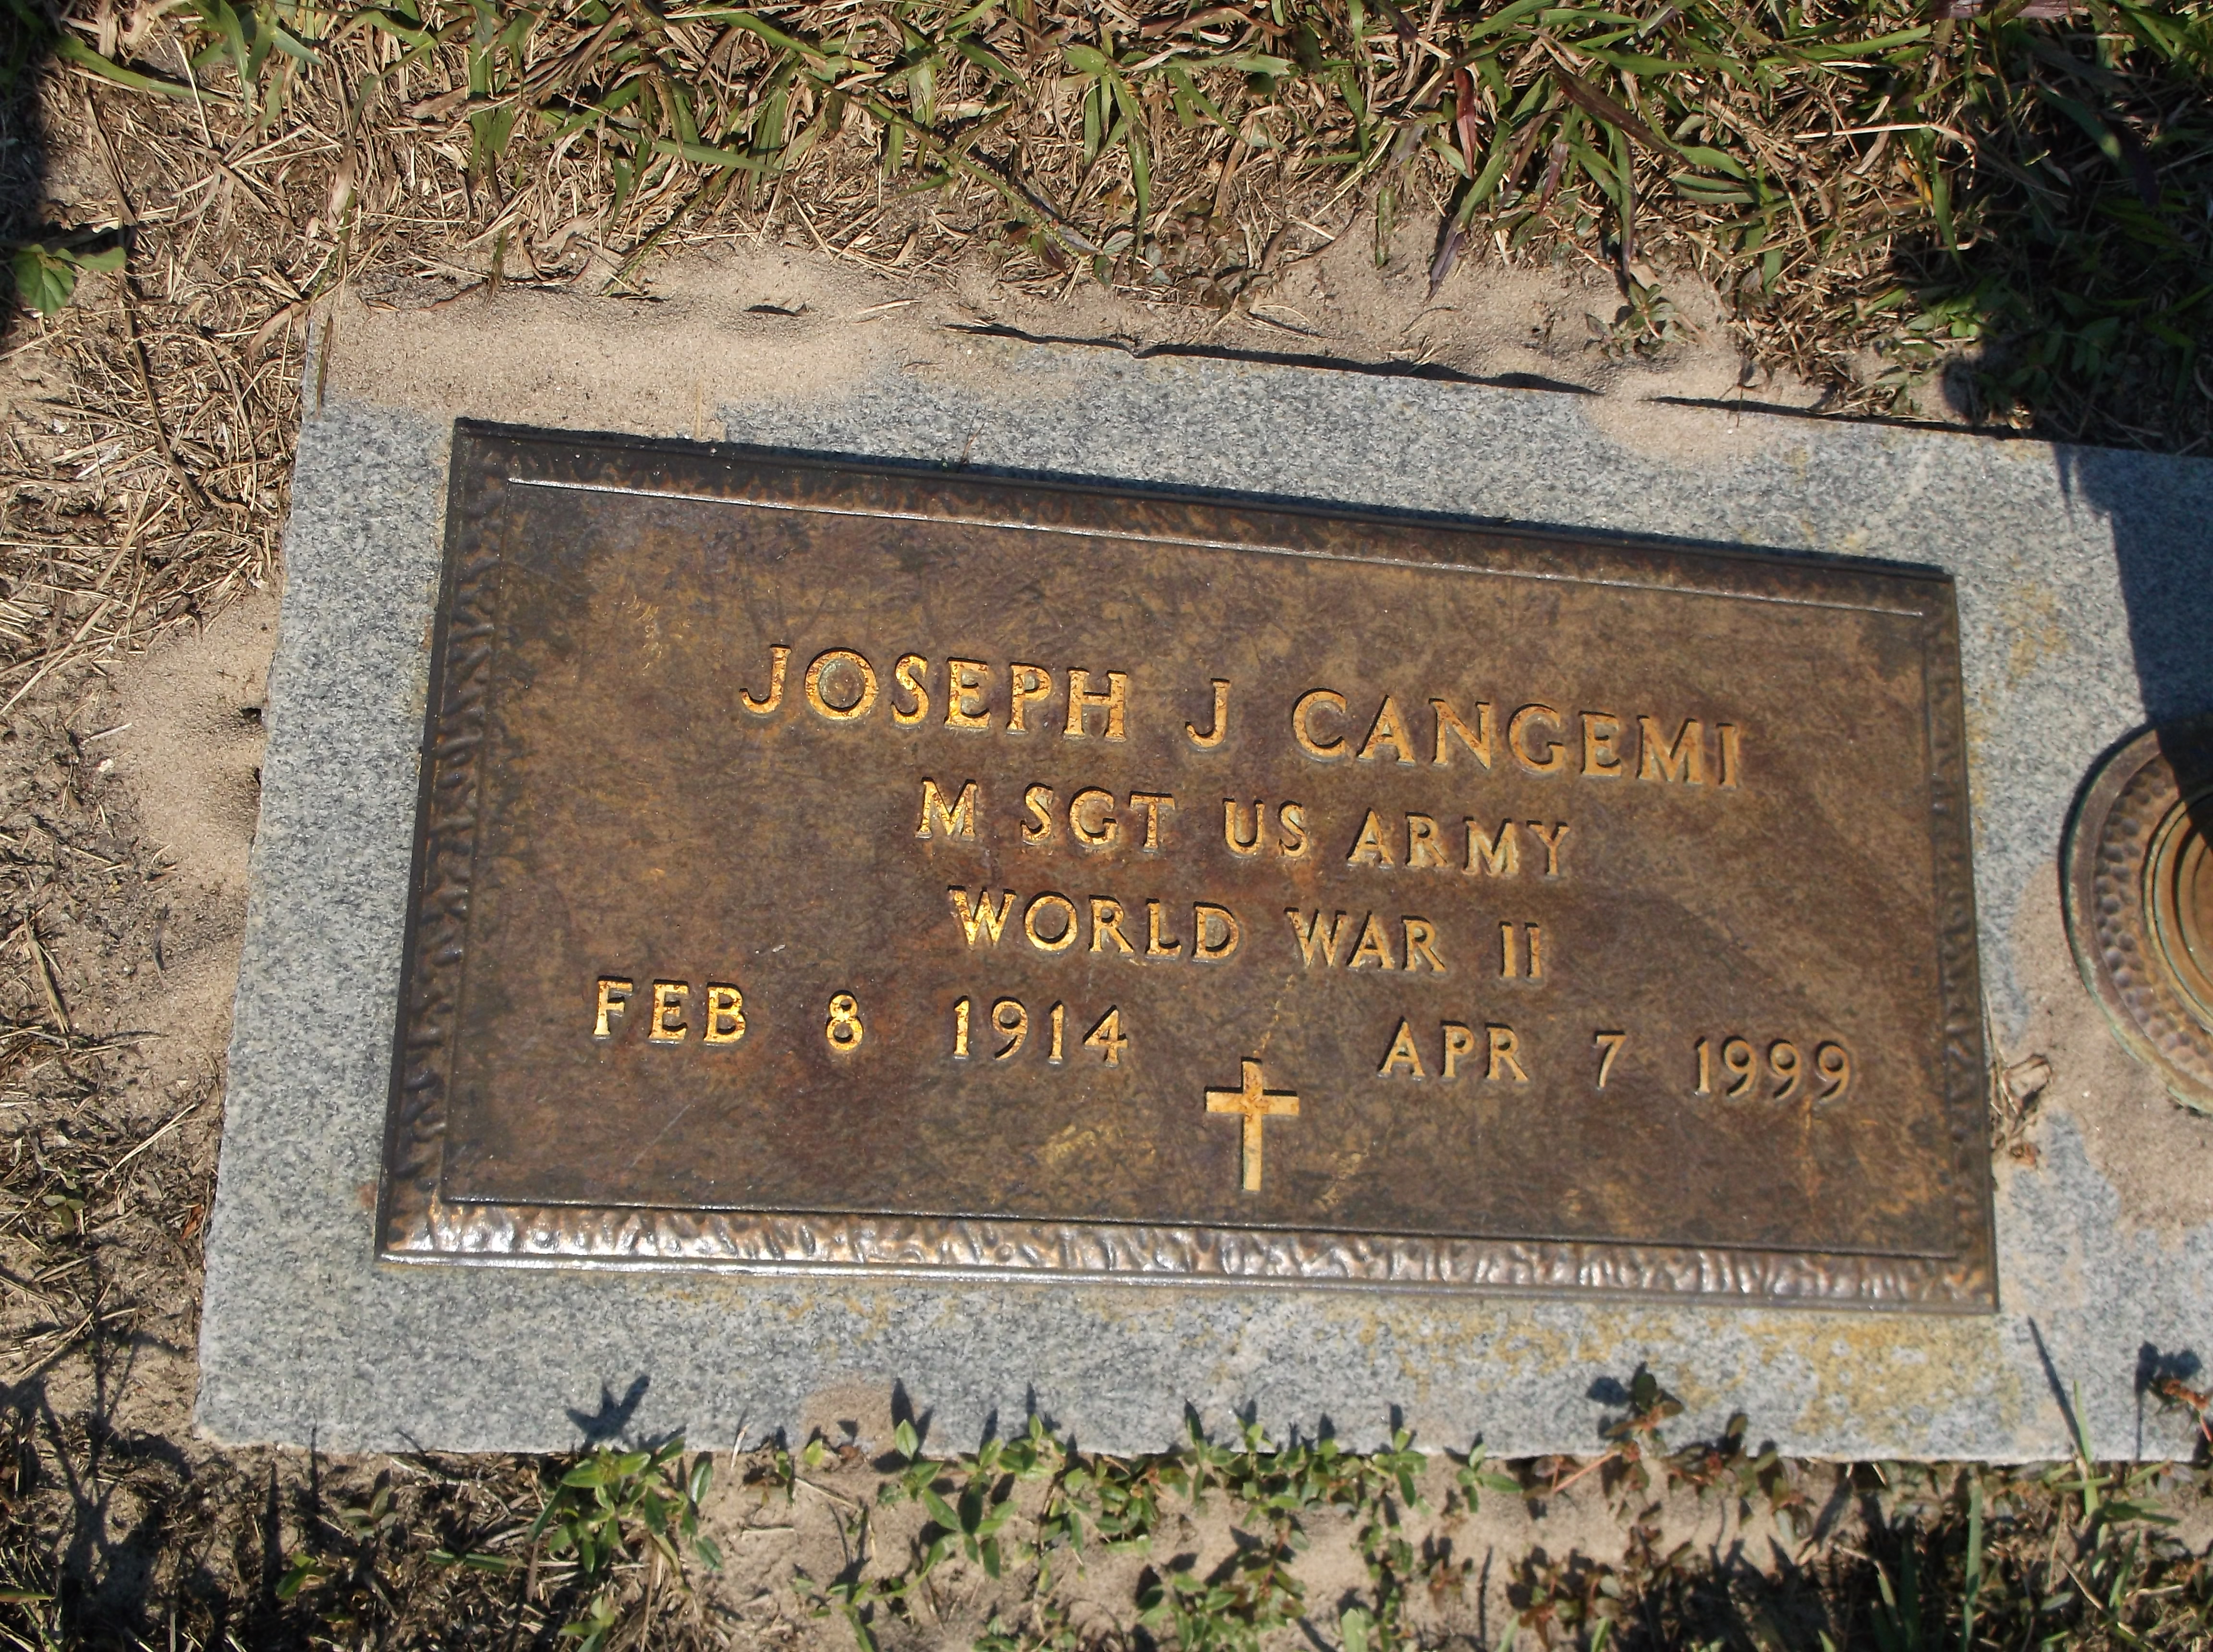 Joseph J Cangemi